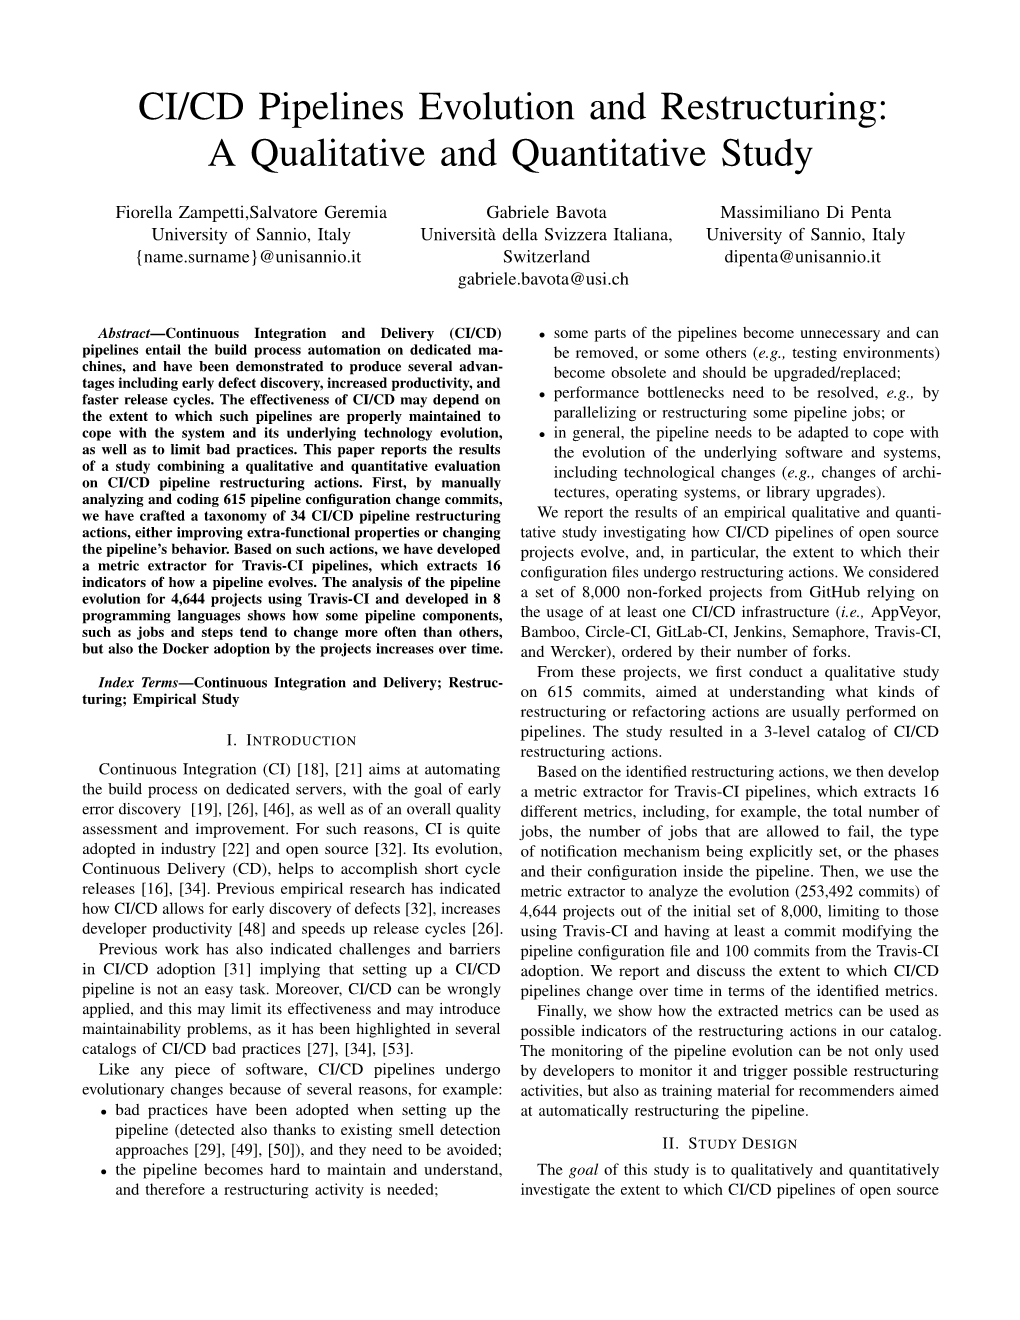 CI/CD Pipelines Evolution and Restructuring: a Qualitative and Quantitative Study